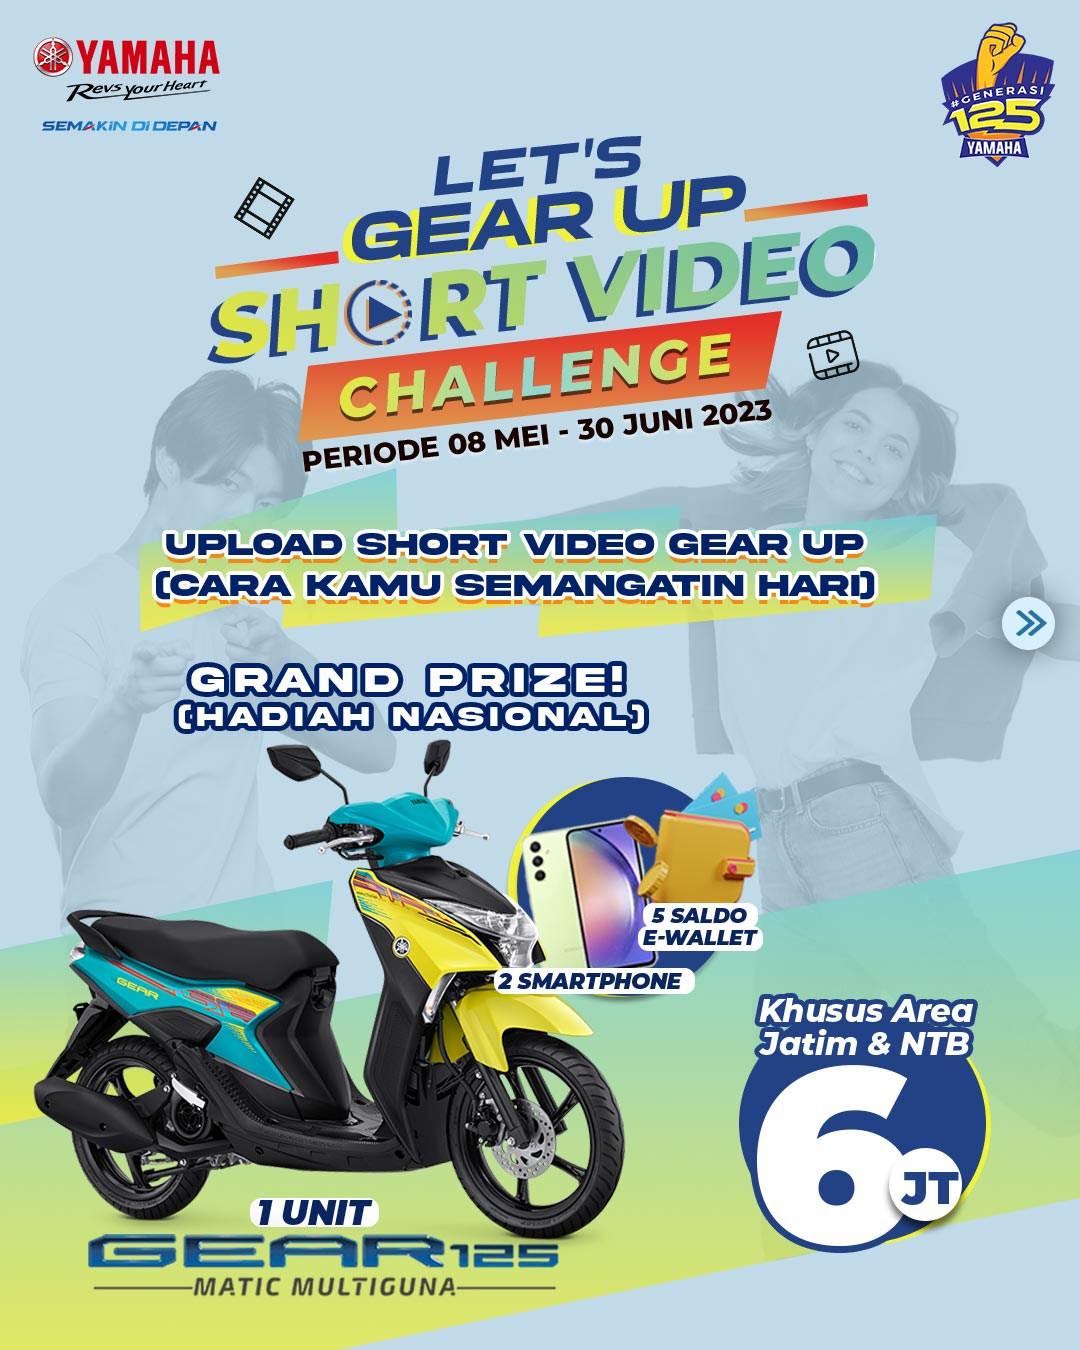 Berita, Gear Video Challenge 1: Yamaha STSJ Adakan Short Video Challenge Untuk Gear 125